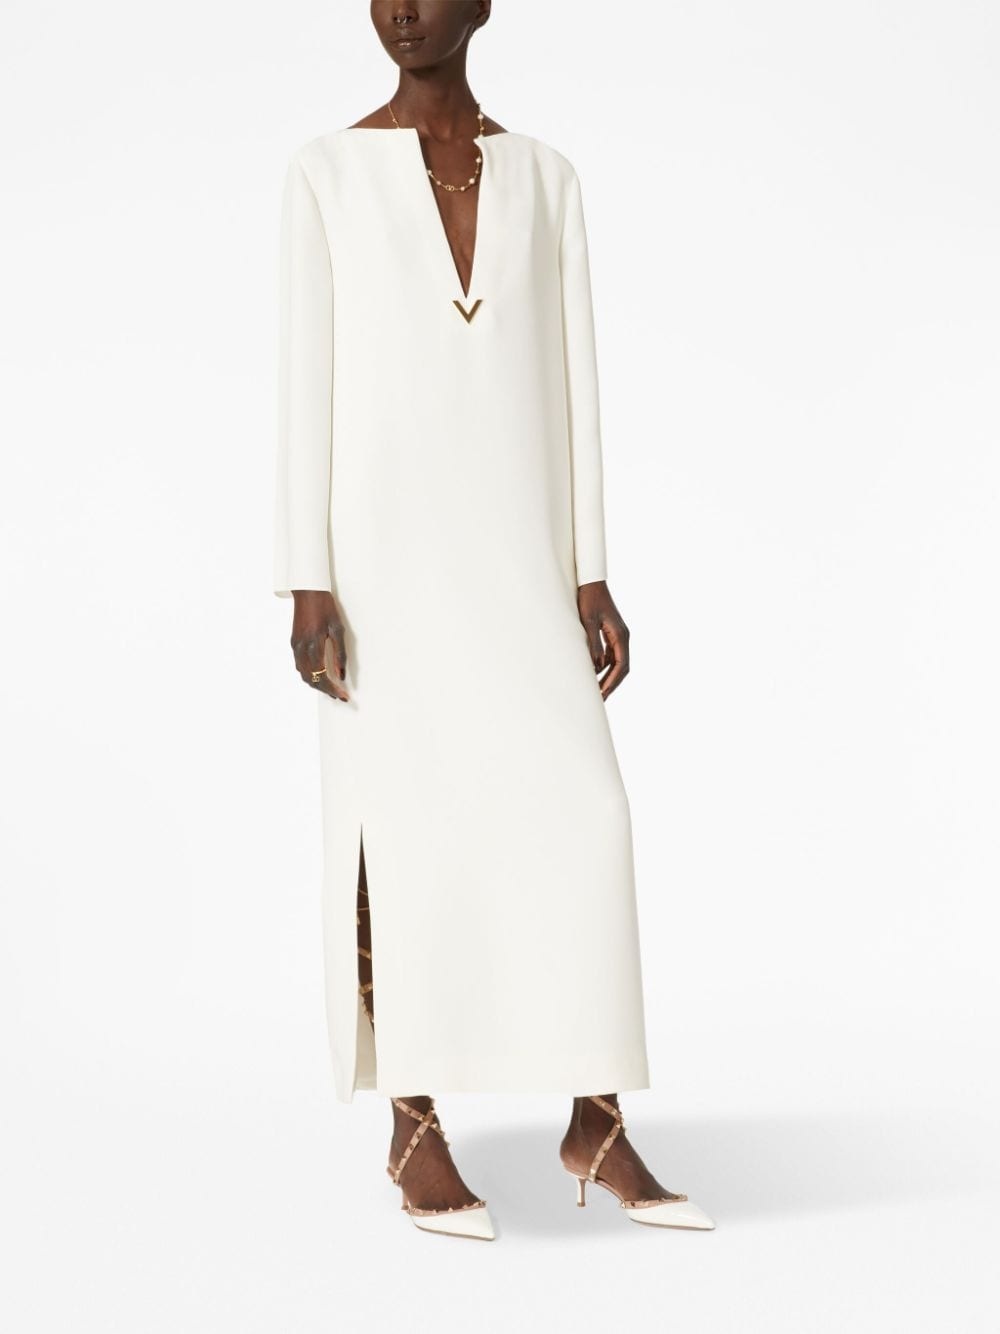 Cady Couture silk dress - 3